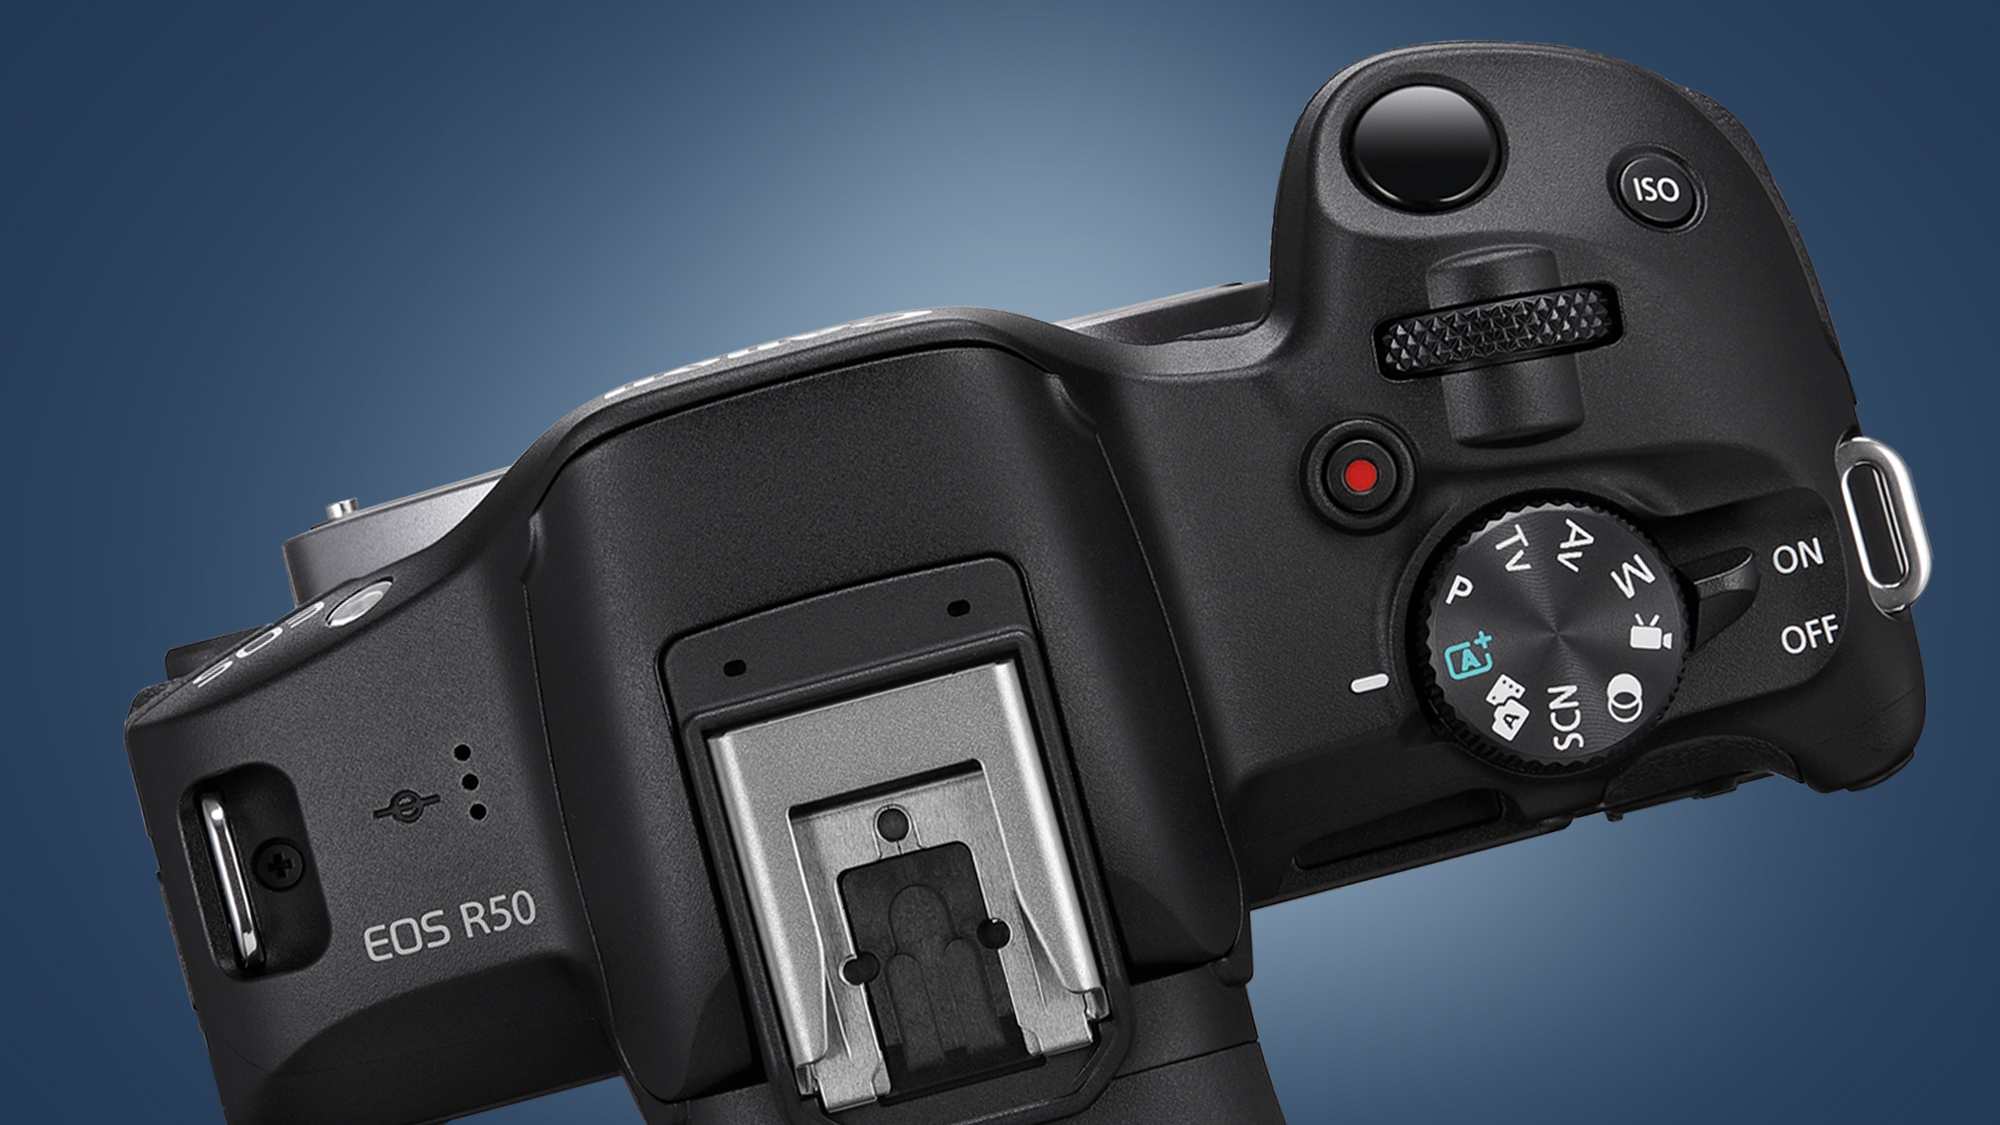 The верхняя часть камеры Canon EOS R50 на синем фоне